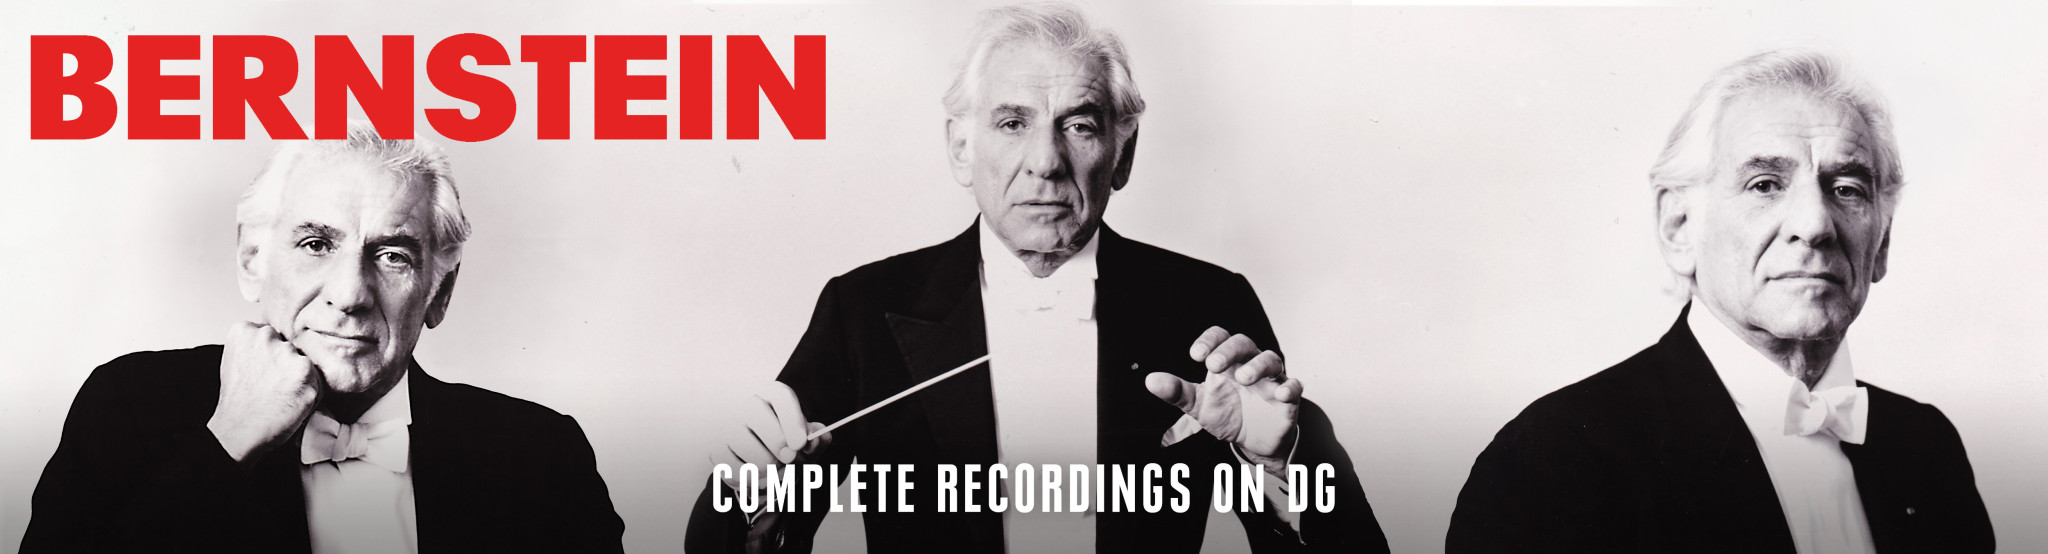 Leonard Bernstein Complete Recordings on DG hero banner